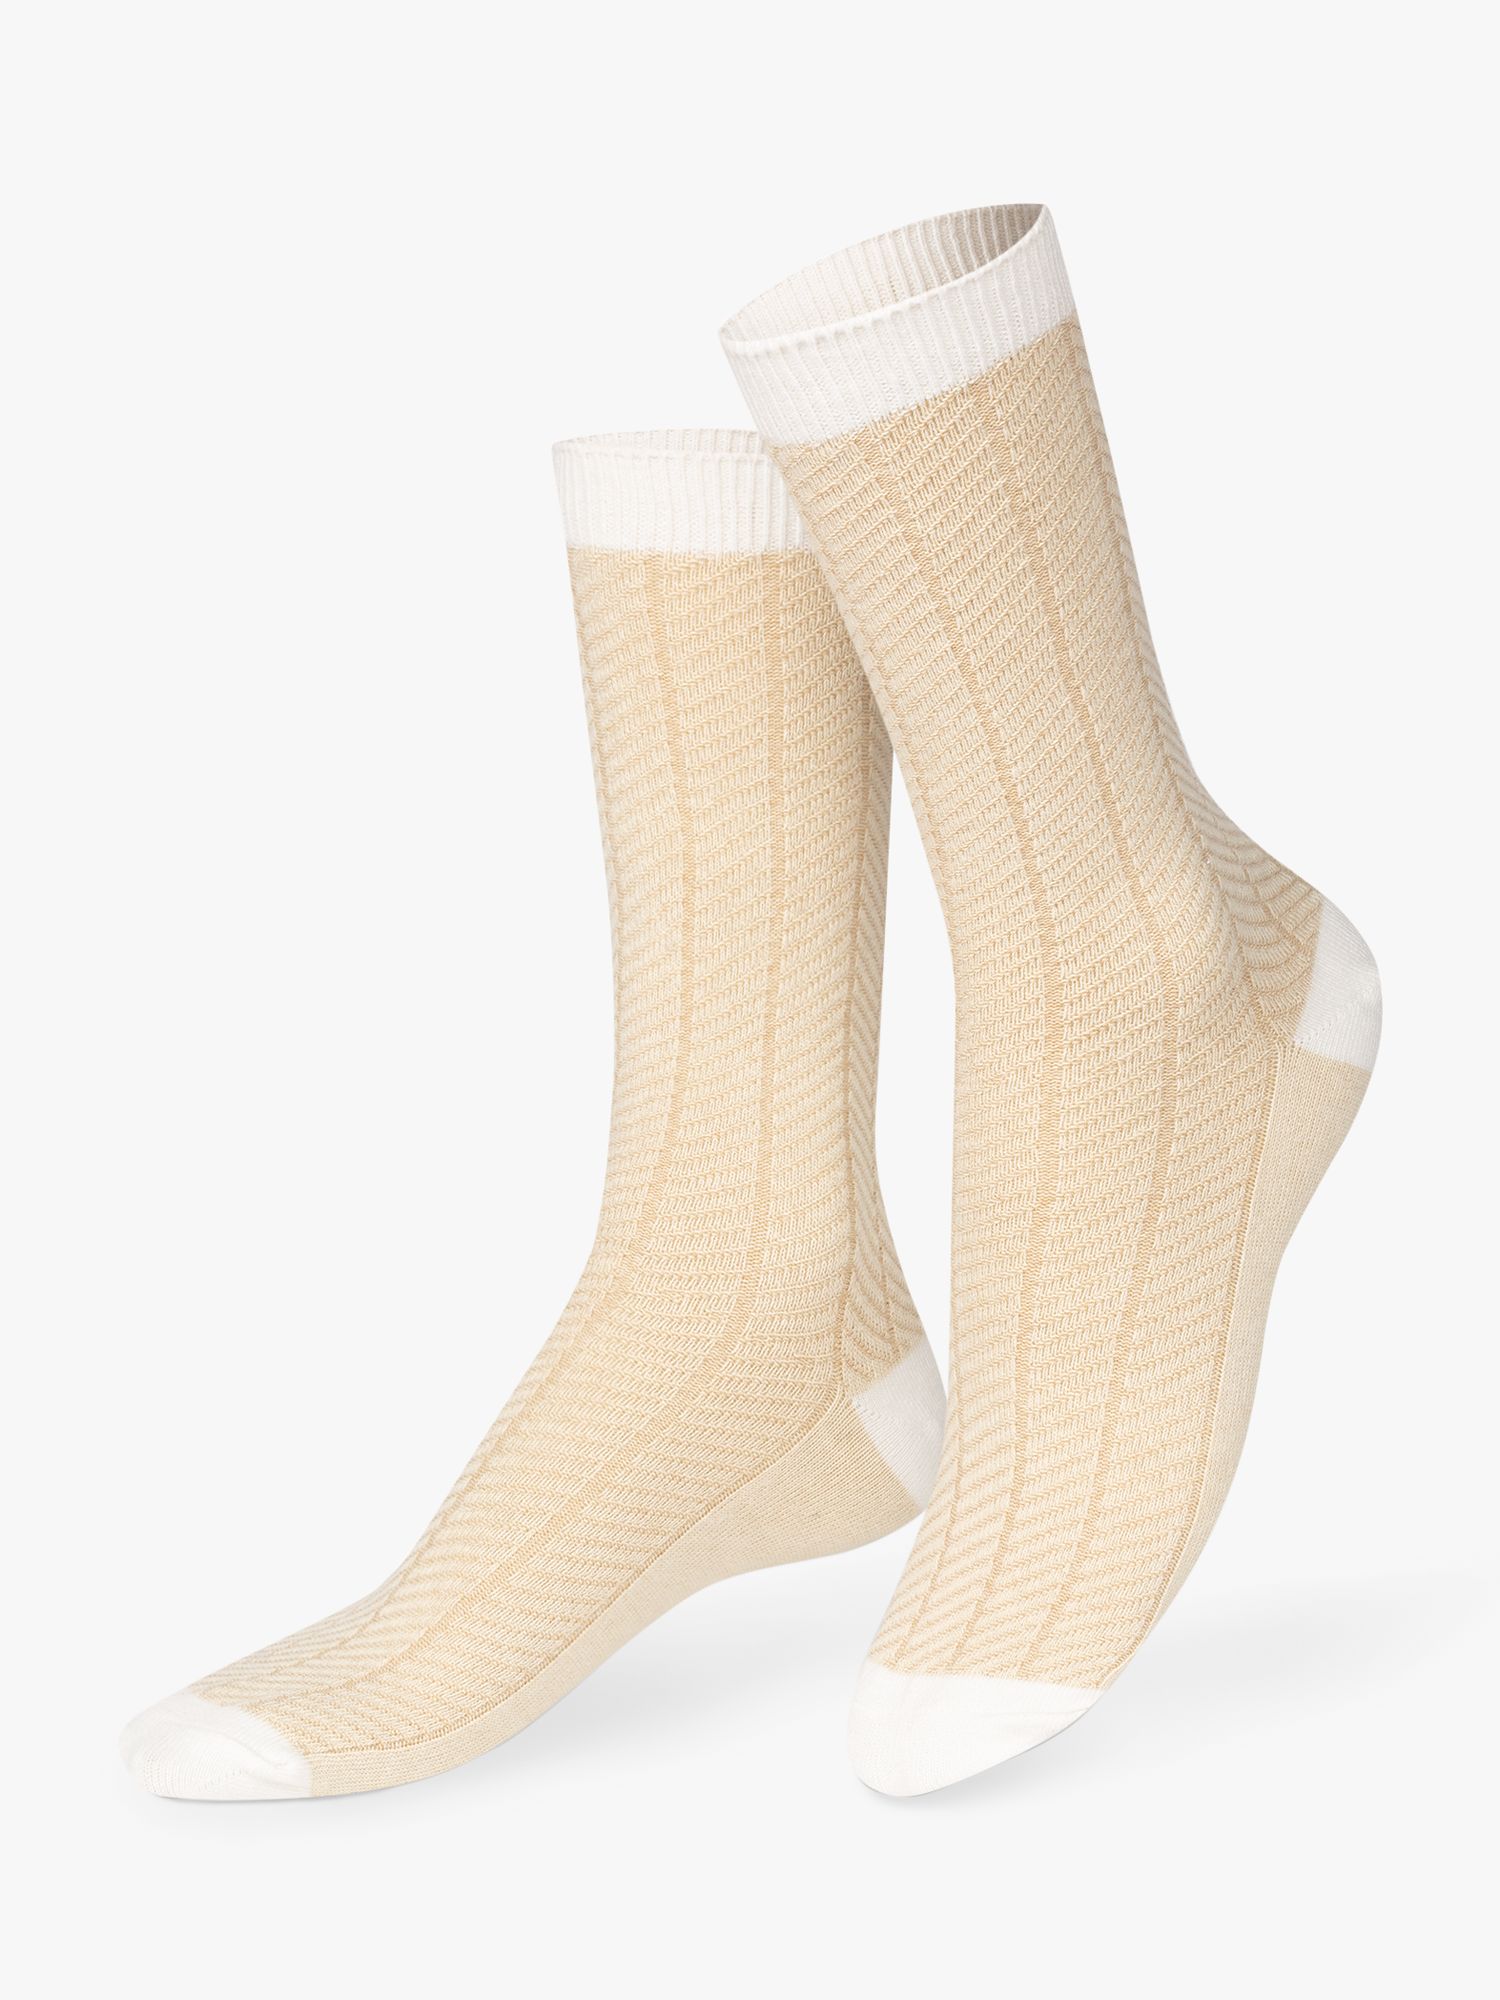 Buy EAT MY SOCKS Petit Camembert Socks, Multi. One Size Online at johnlewis.com